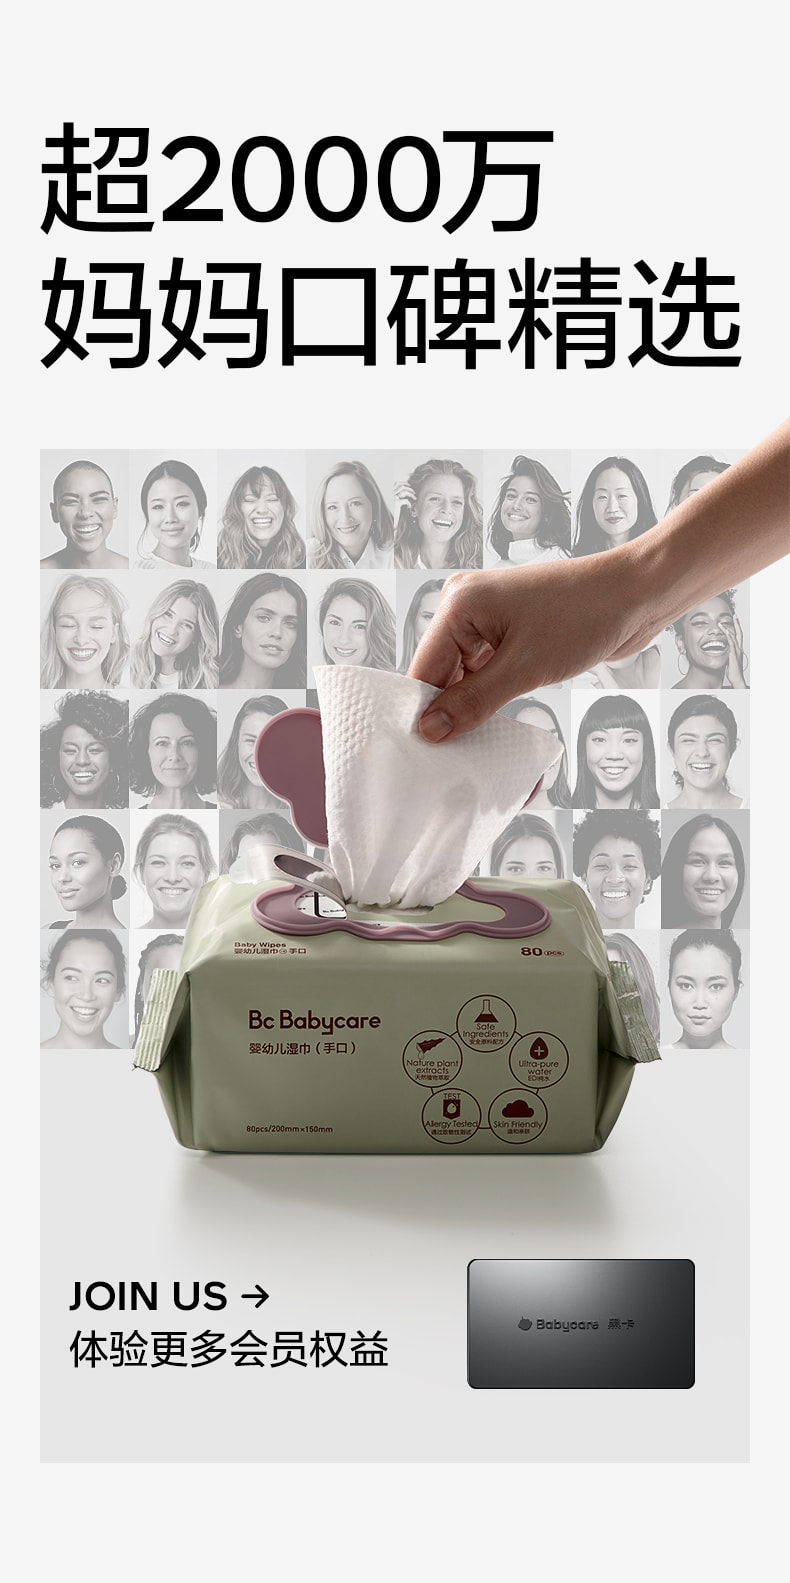 【中国直邮】Bc Babycare 婴幼儿手口湿巾 200mm*150mm-10抽/包